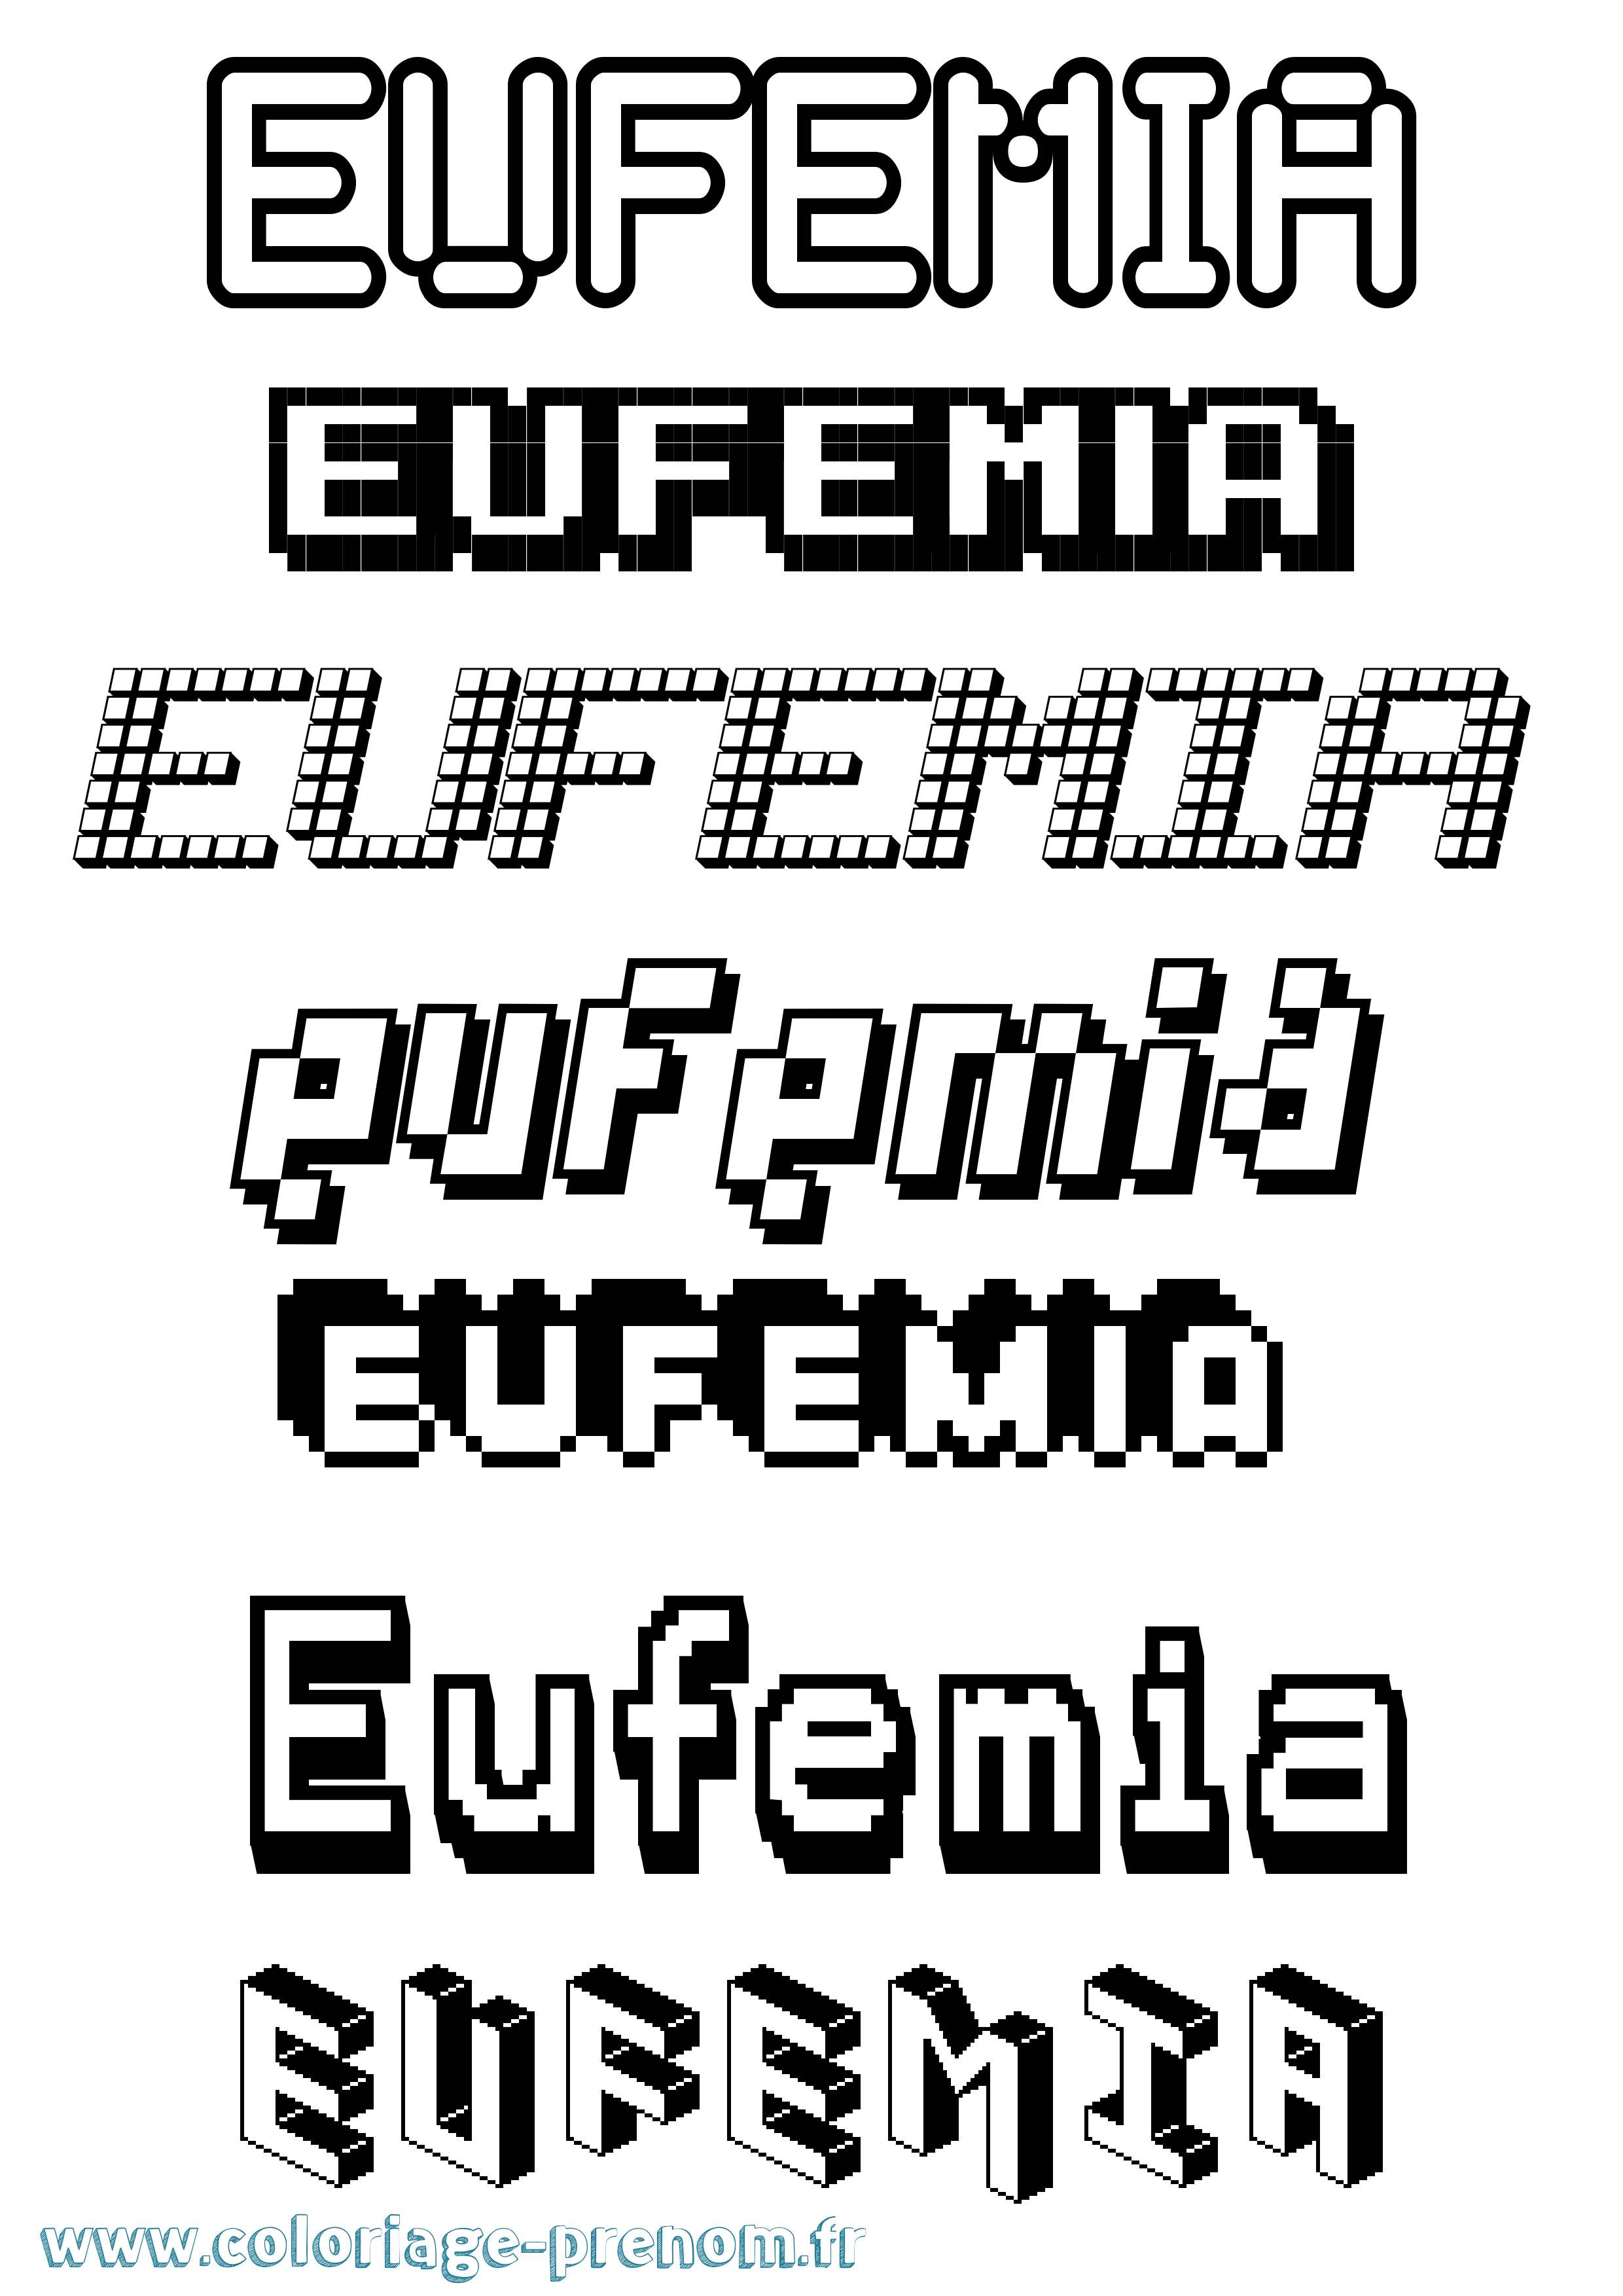 Coloriage prénom Eufemia Pixel